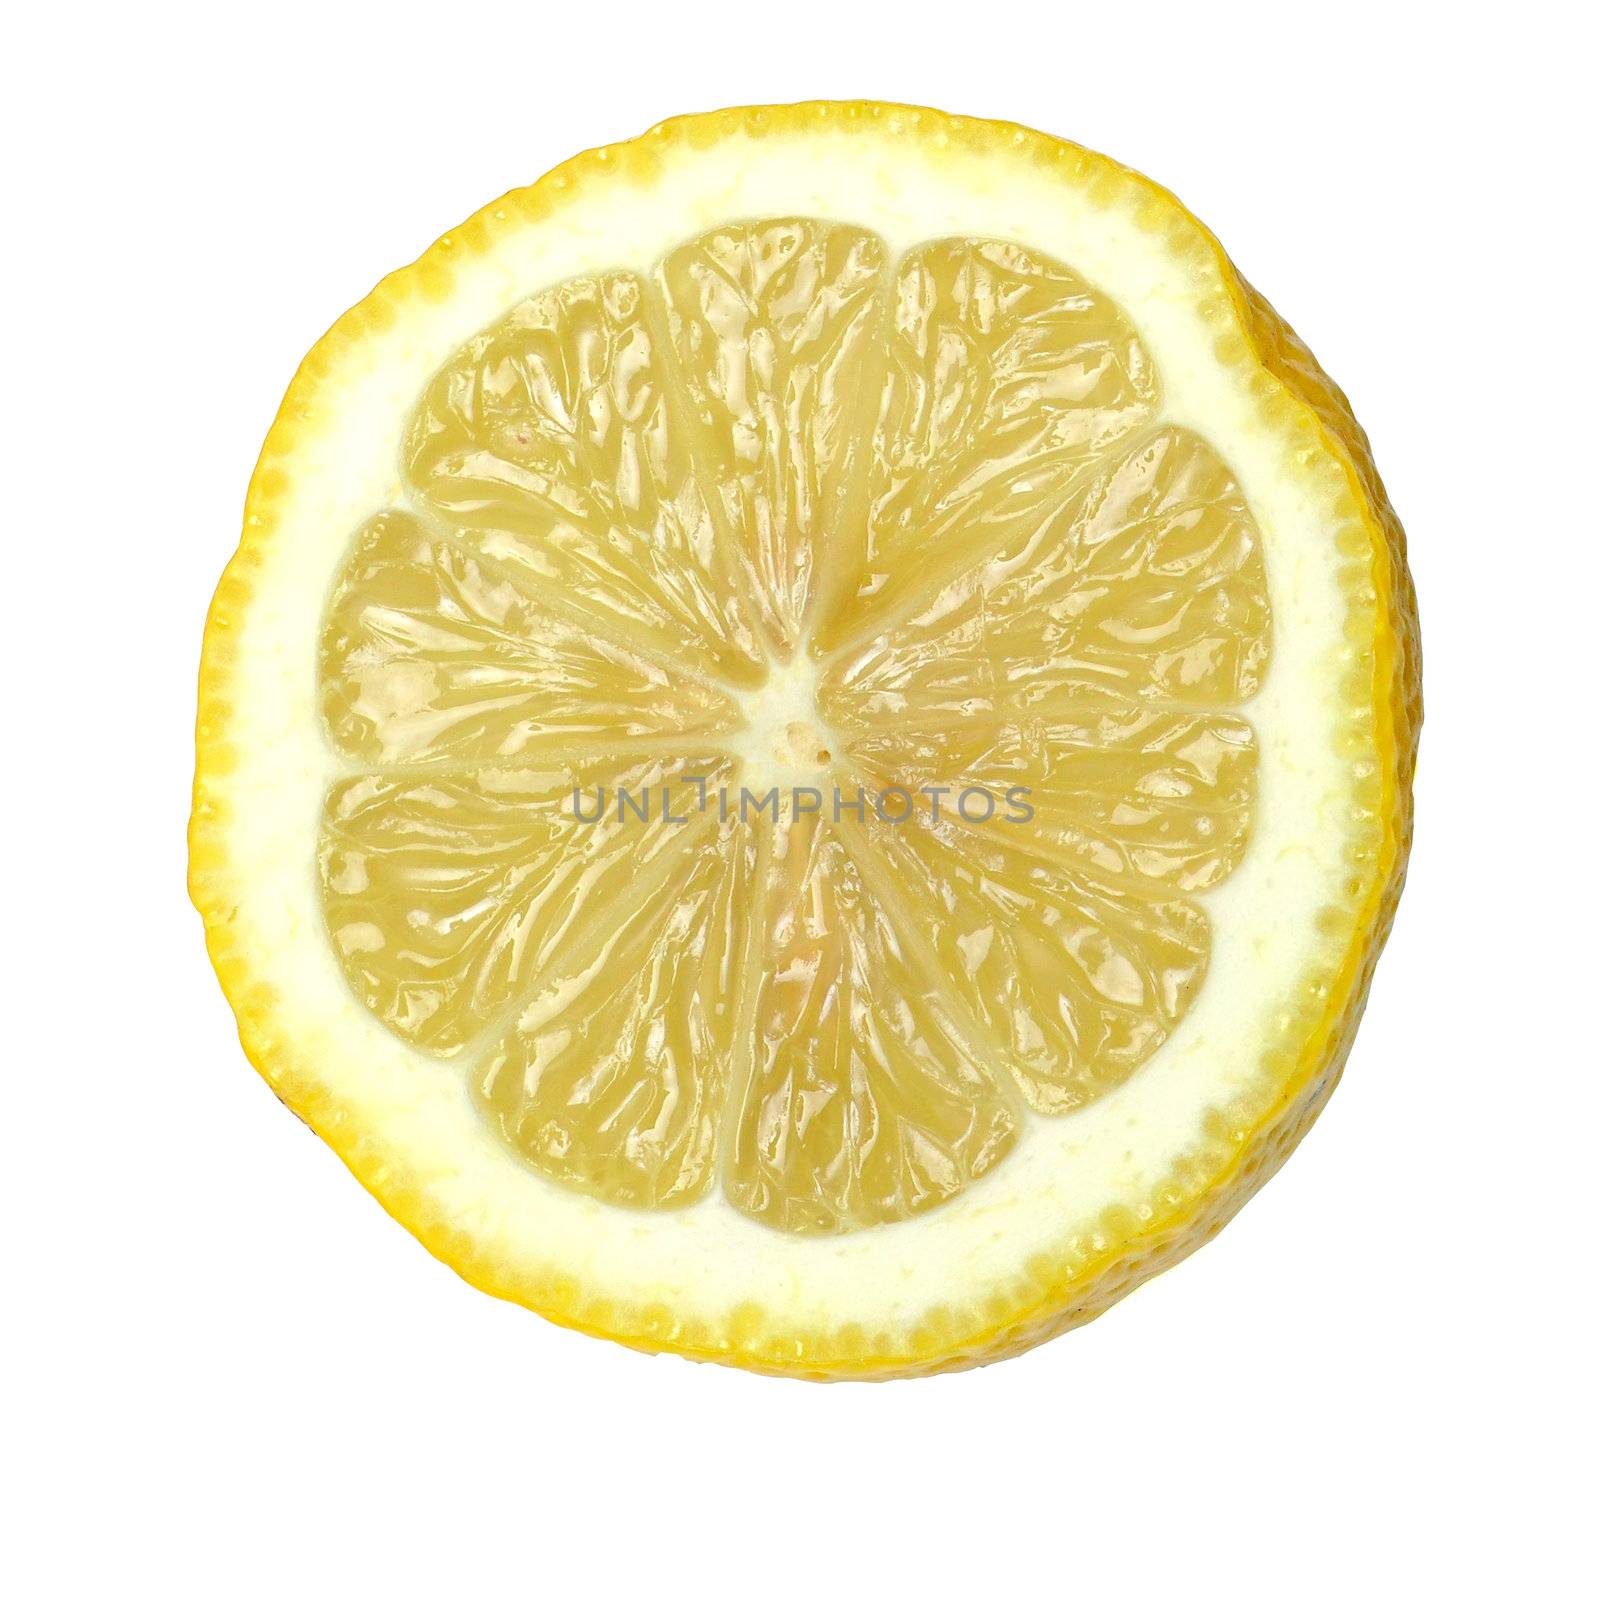 Tropical fruits: Lemon by adamr